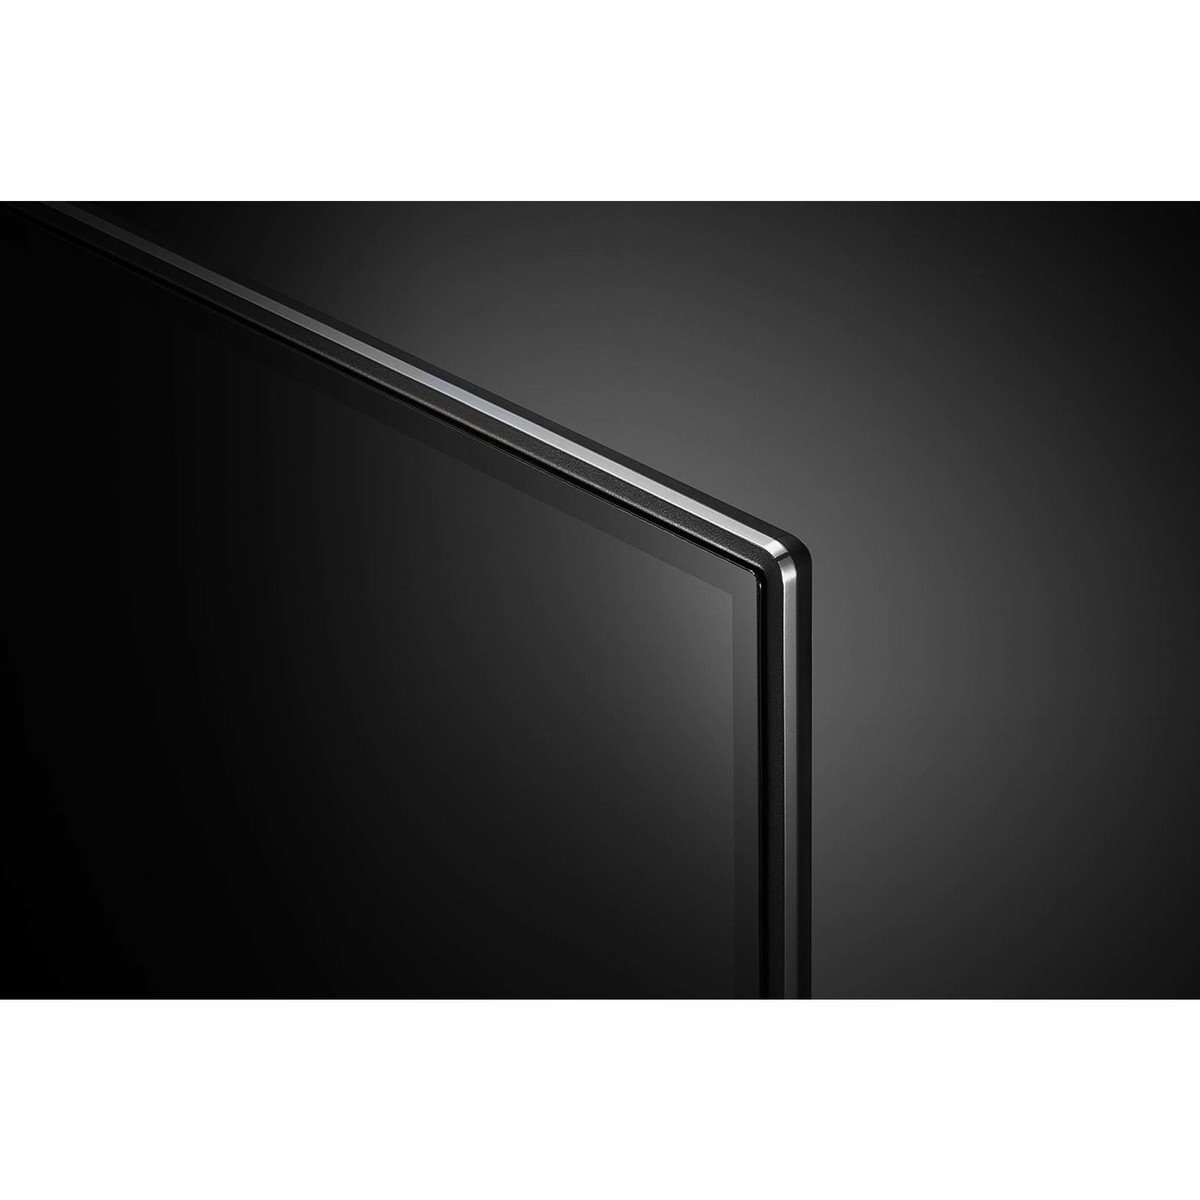 LG NanoCell Super Ultra HD TV 55SM9000PVA 55"